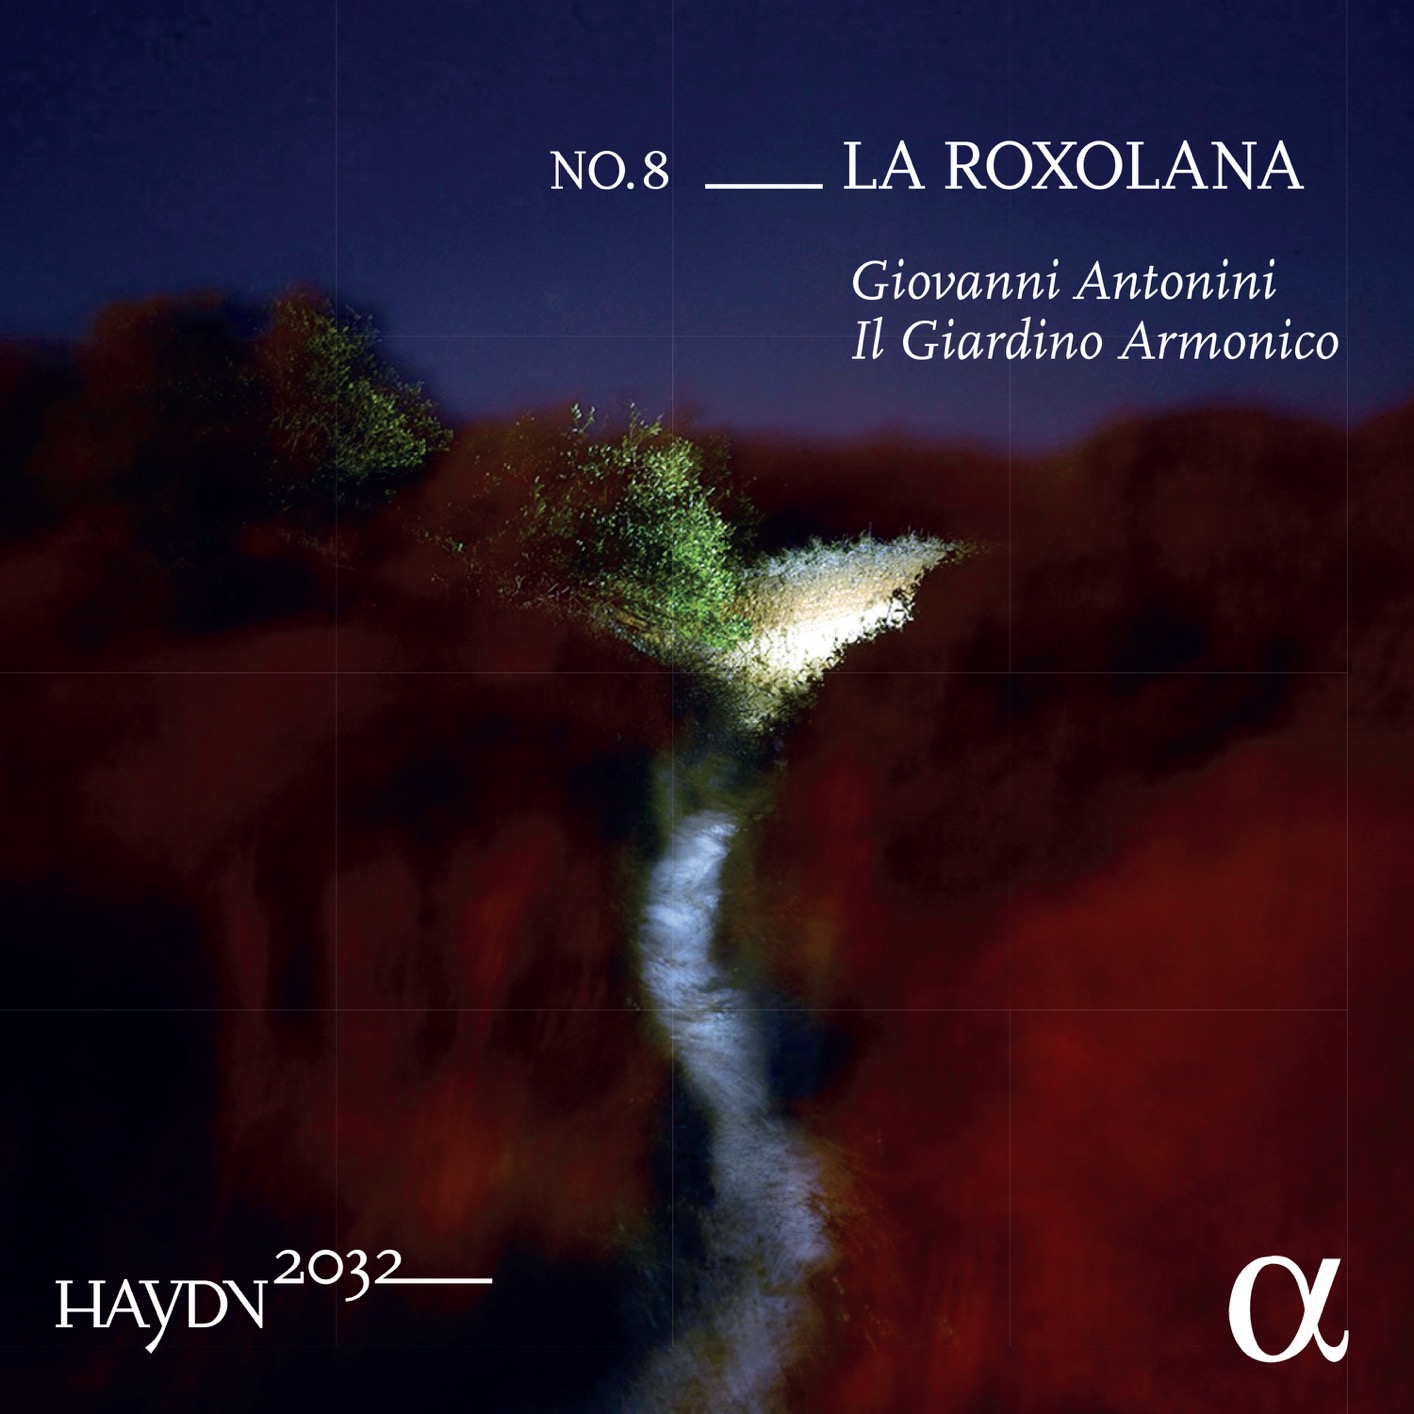 Giovanni Antonini & Il Giardino Armonico – Haydn 2032, Vol. 8: La Roxolana (2020) [FLAC 24bit/176,4kHz]